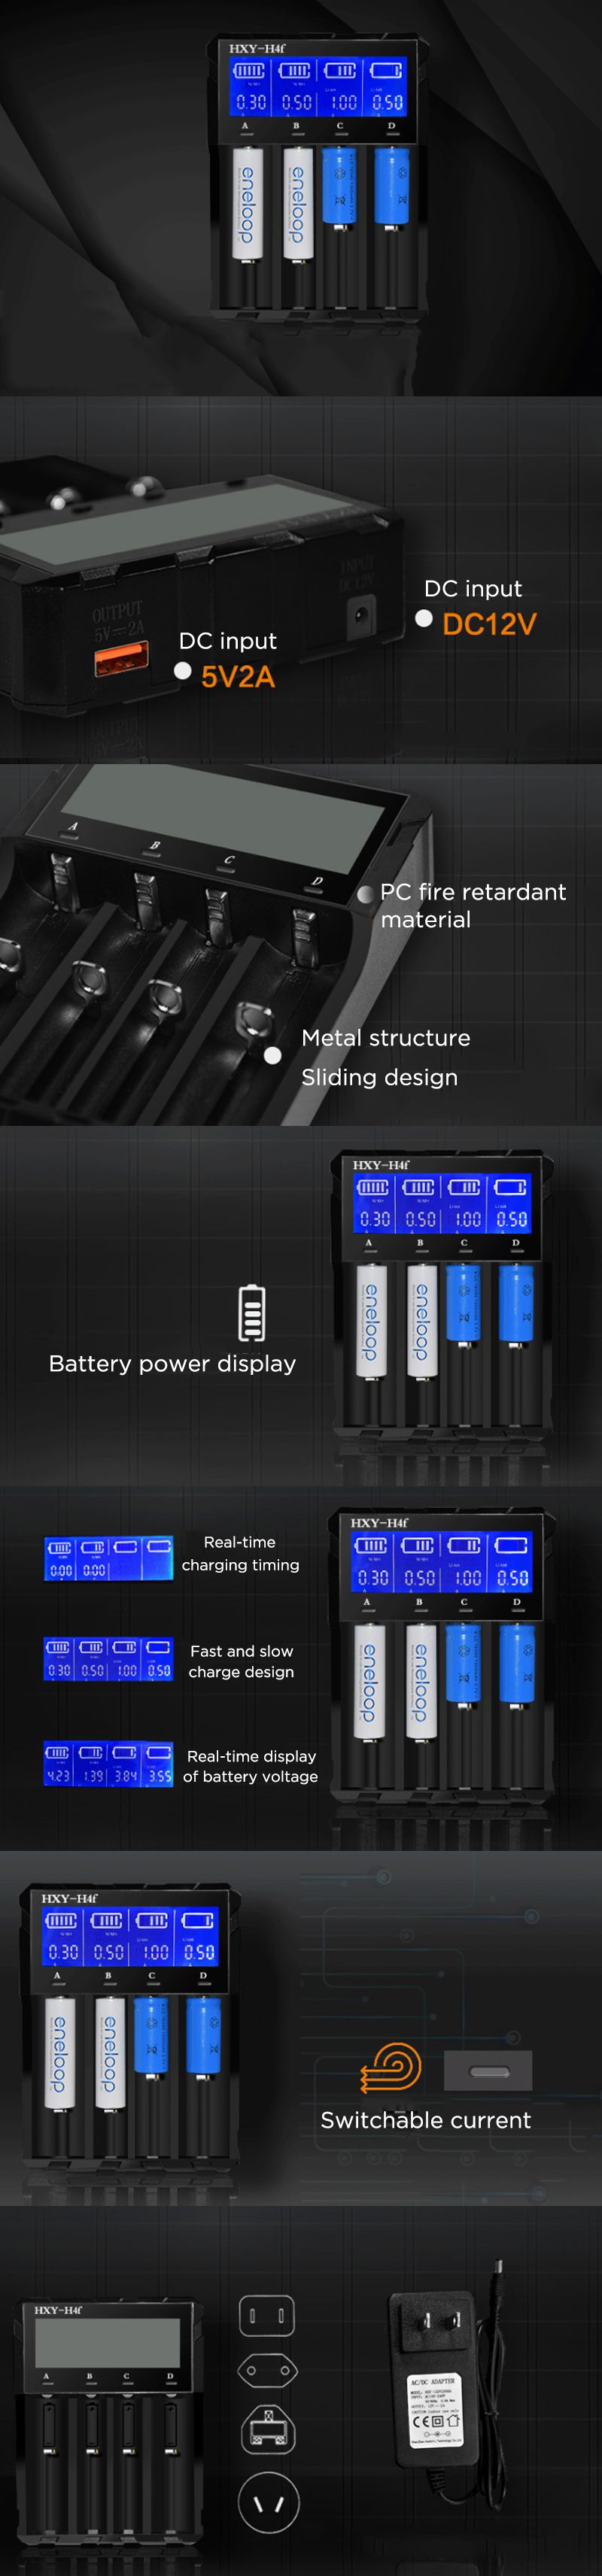 HXY-H4F-LCD-Display-Adjustable-Battery-Charger-Universal-4-Slot-EU--US-AC-Plug-Charger-1480040